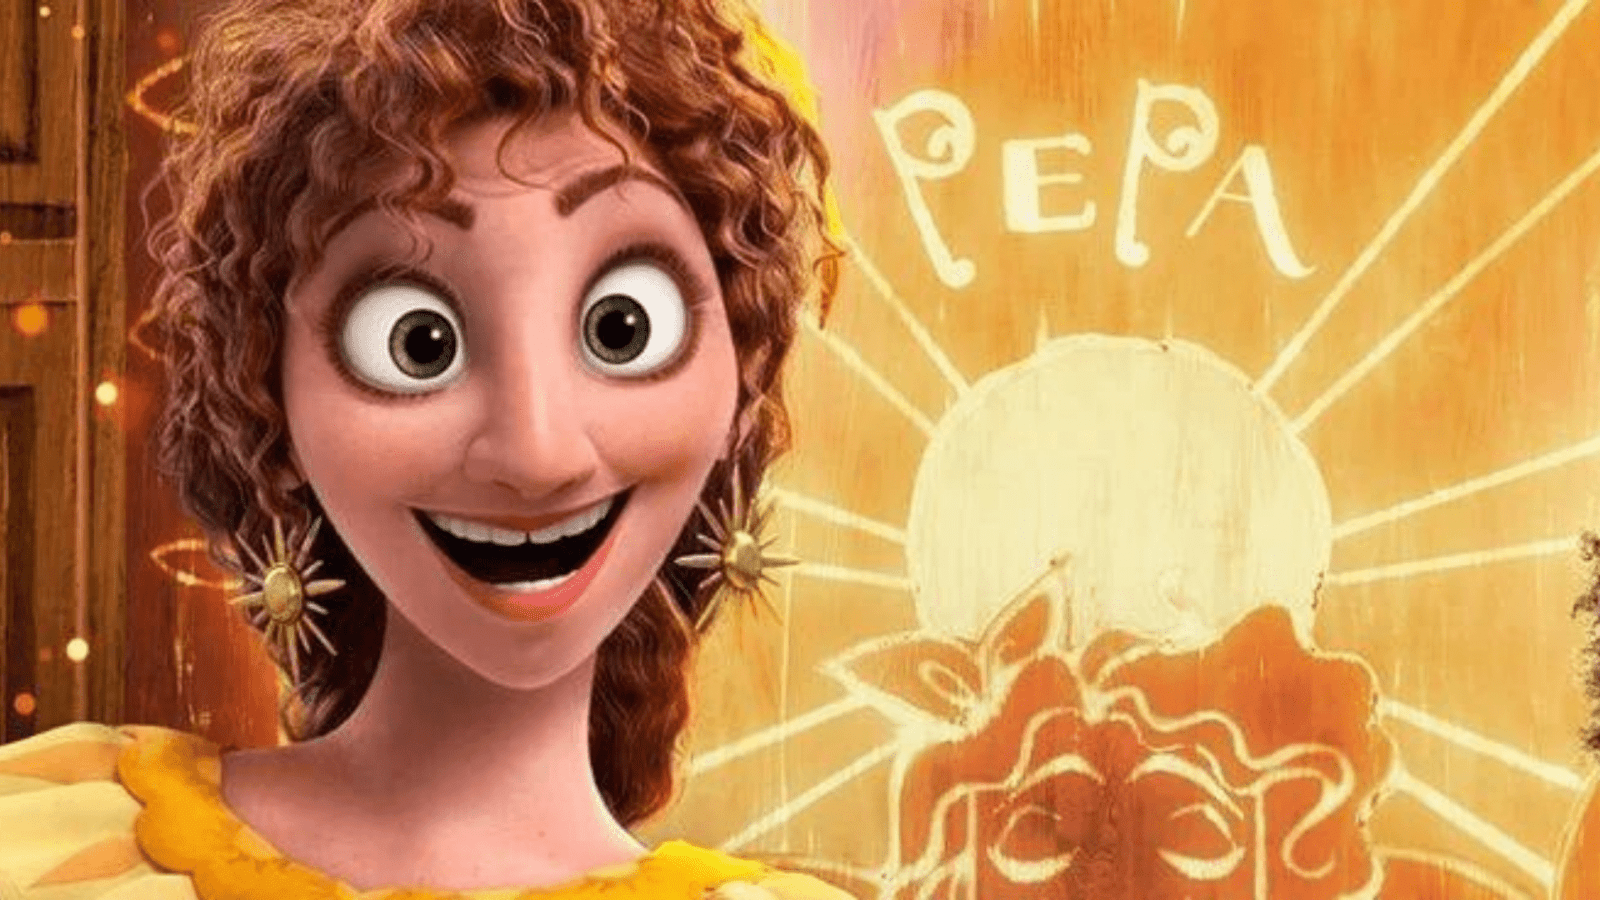 How To Replicate Pepa’s Look from Disney’s “Encanto”